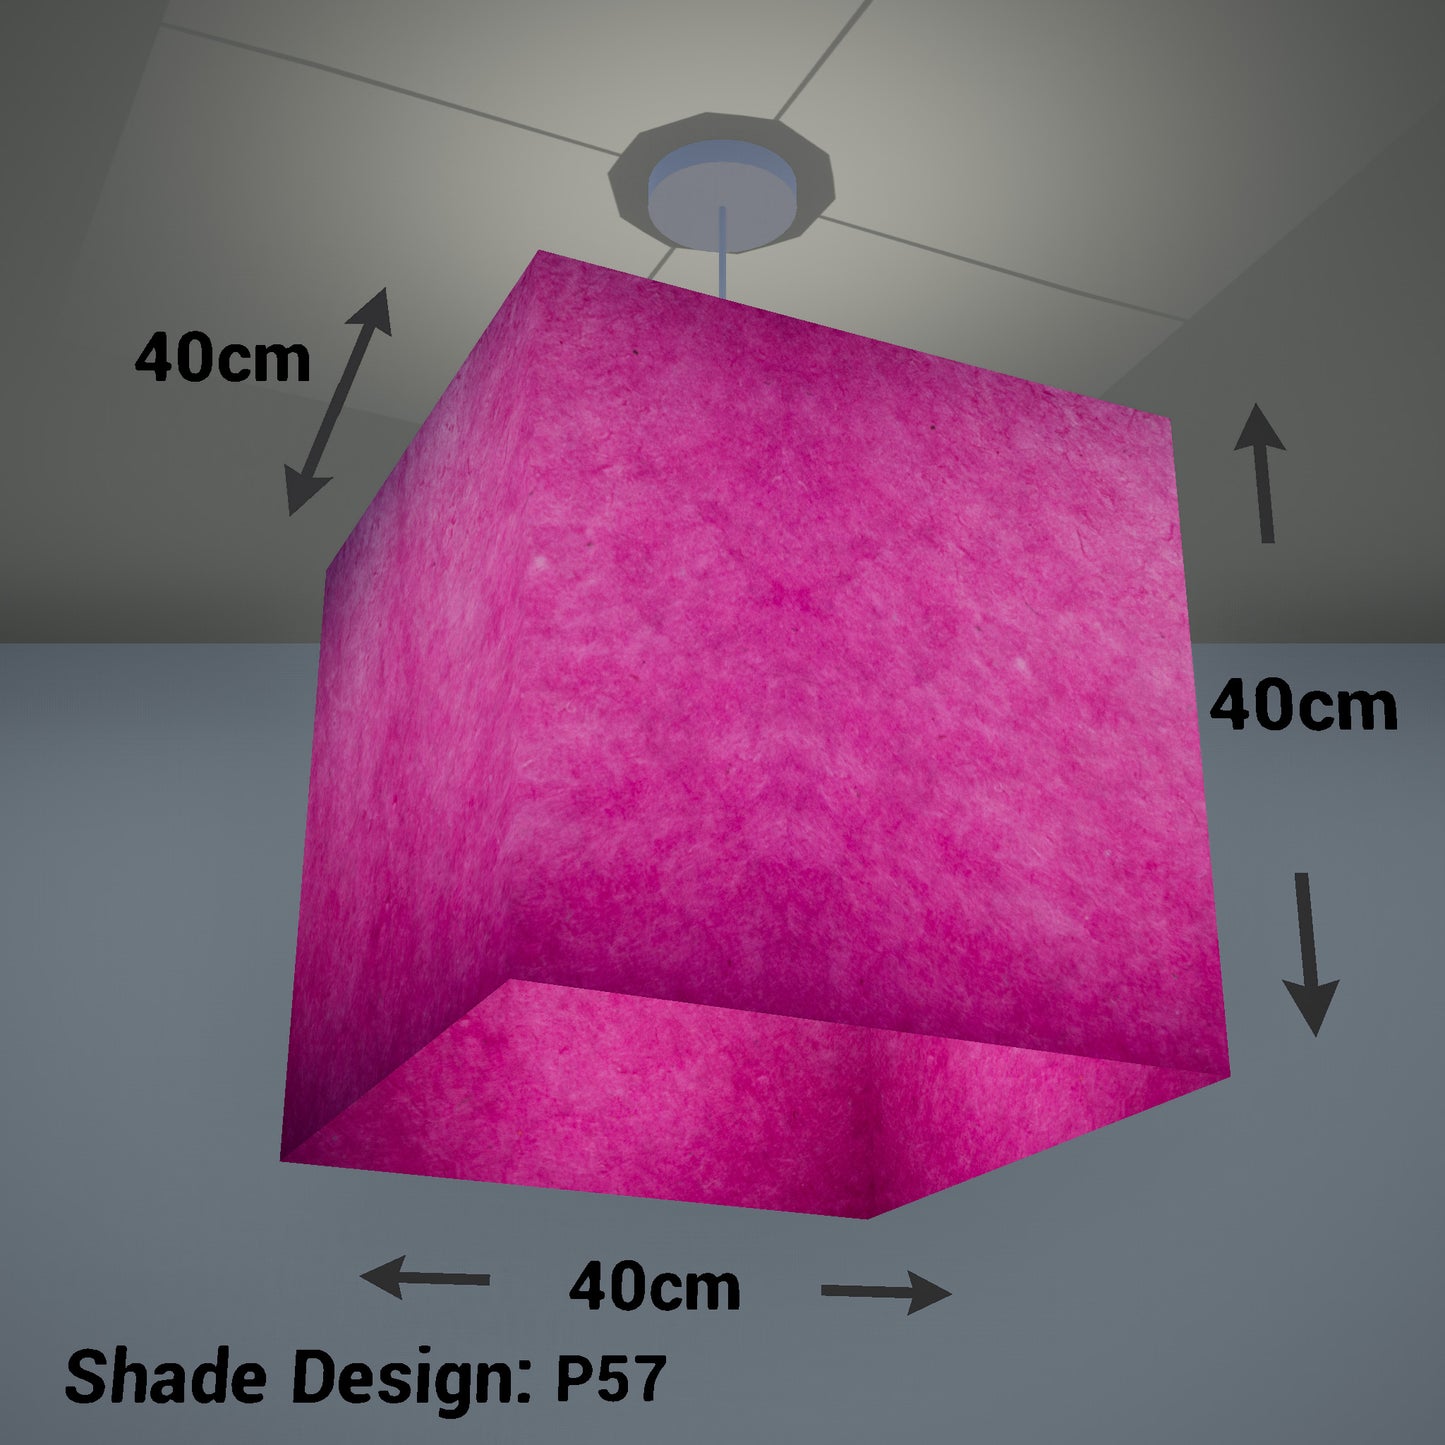 Square Lamp Shade - P57 - Hot Pink Lokta, 40cm(w) x 40cm(h) x 40cm(d)